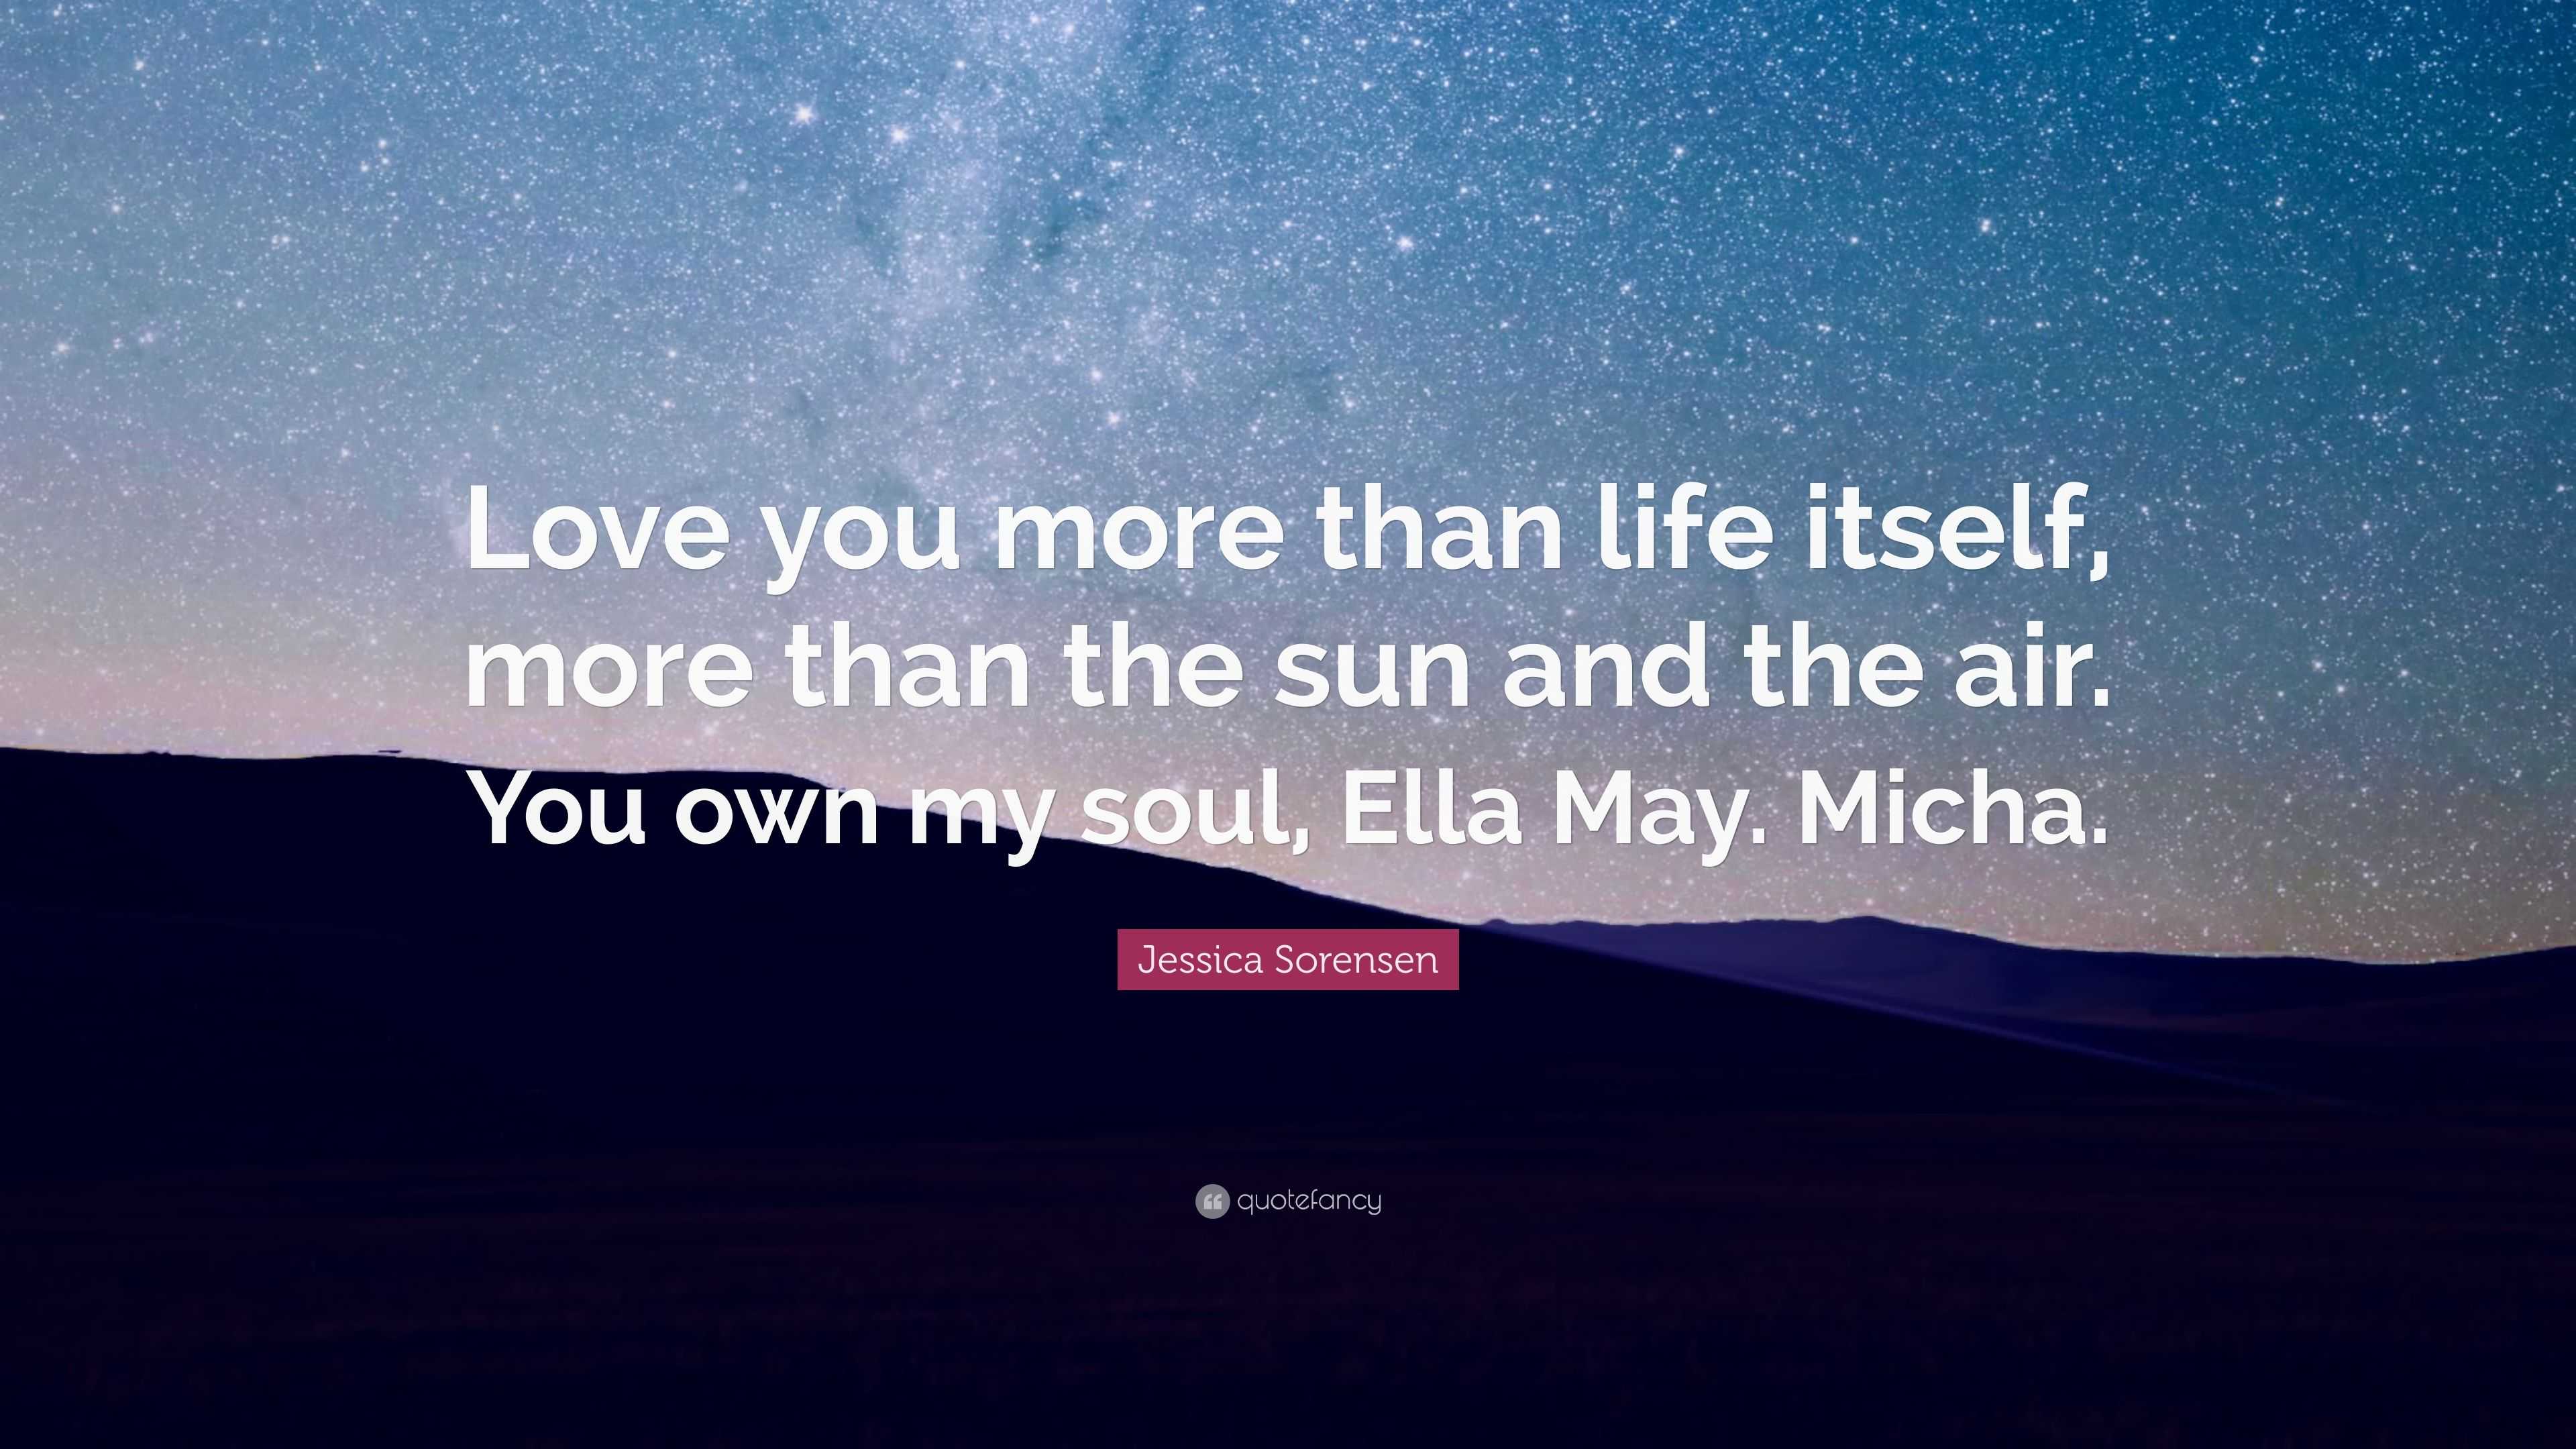 Jessica Sorensen Quote: “Love you more than life itself ...